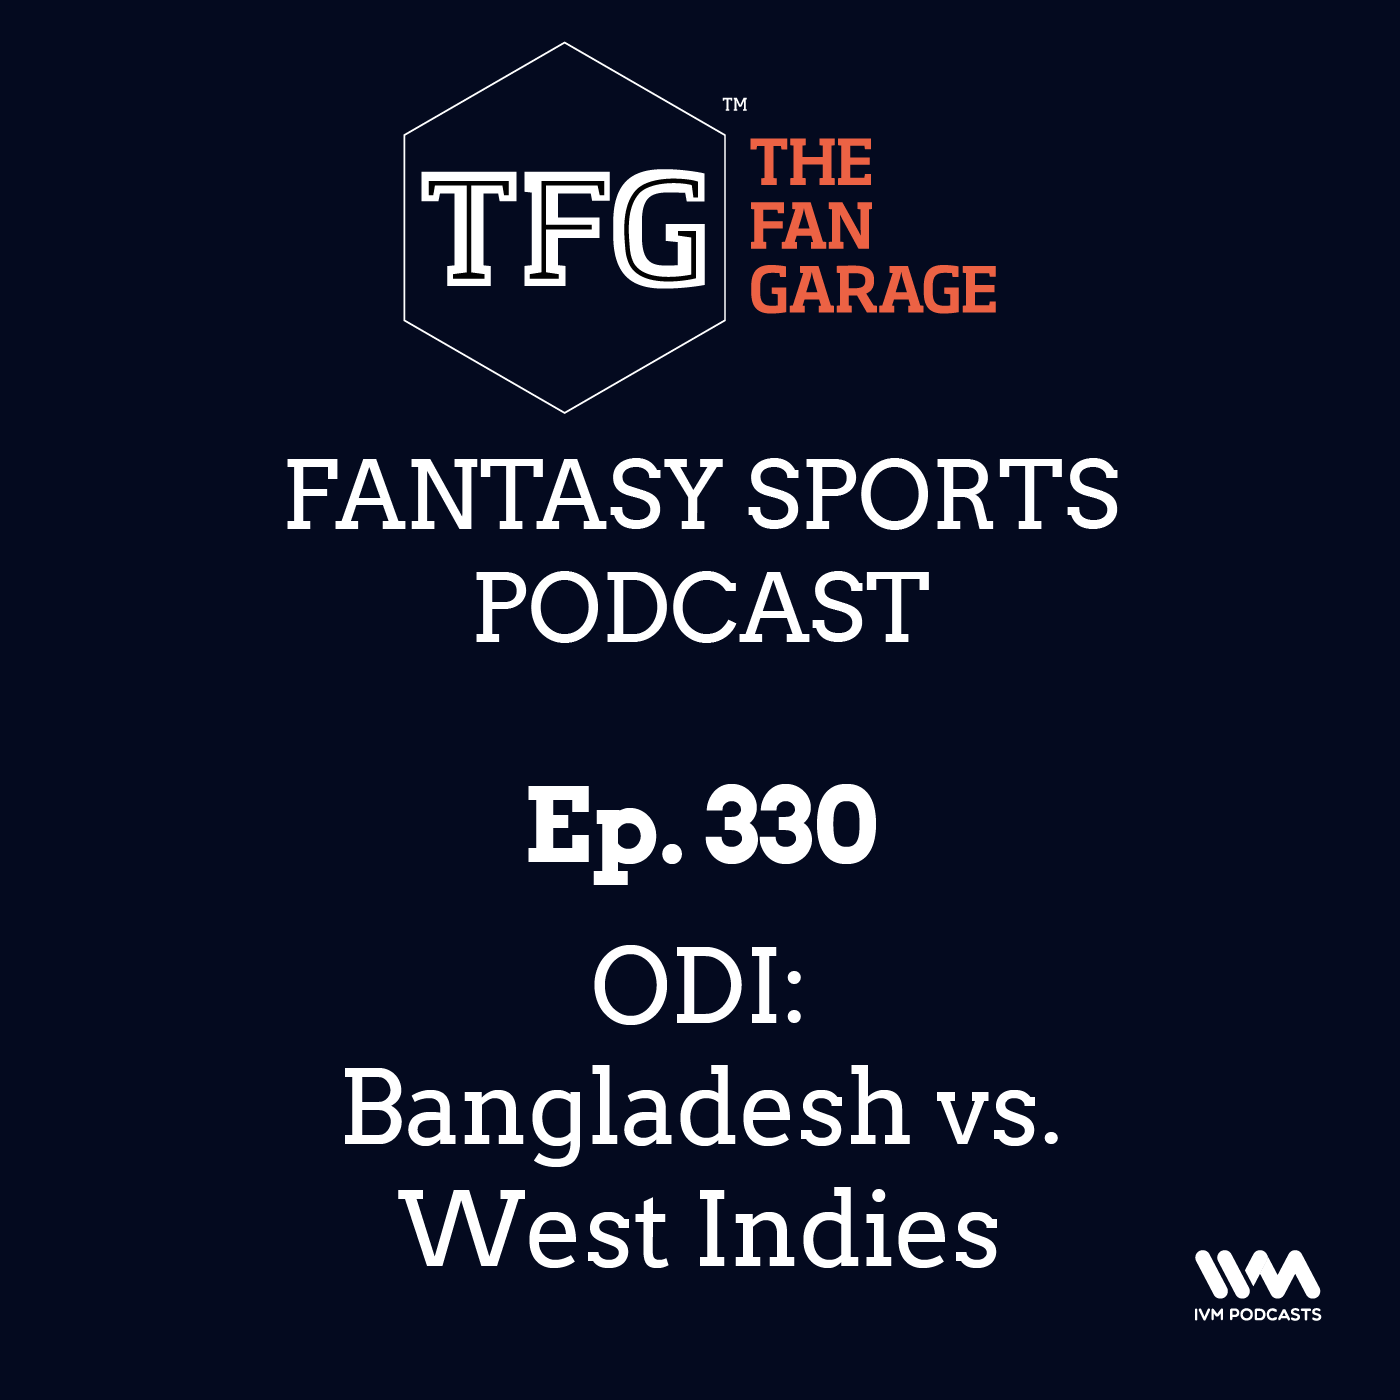 TFG Fantasy Sports Podcast Ep. 330: ODI: Bangladesh vs. West Indies